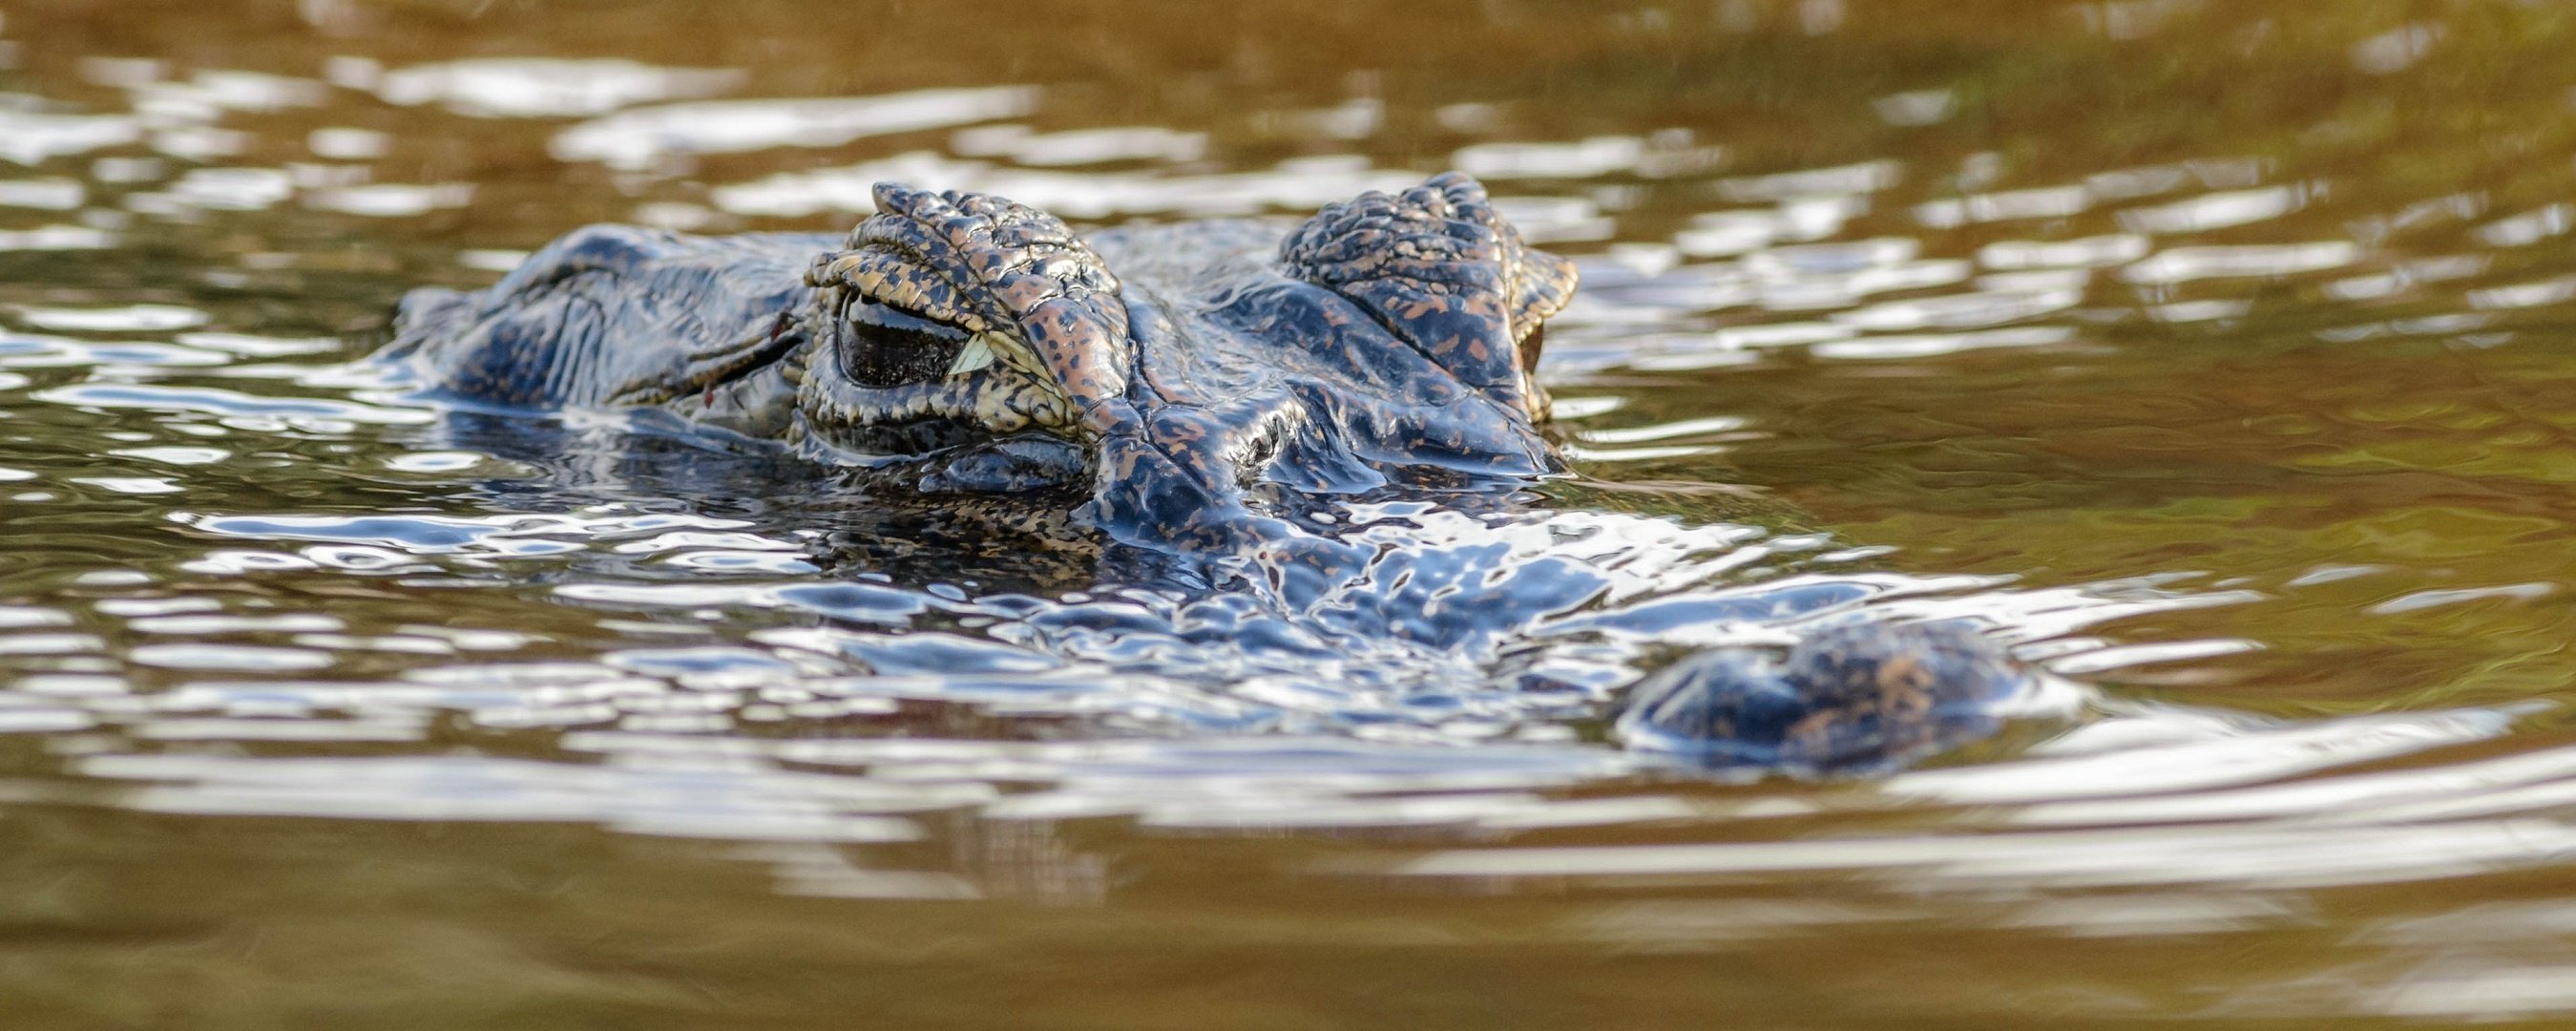 predator, Pond, Crocodile Wallpaper